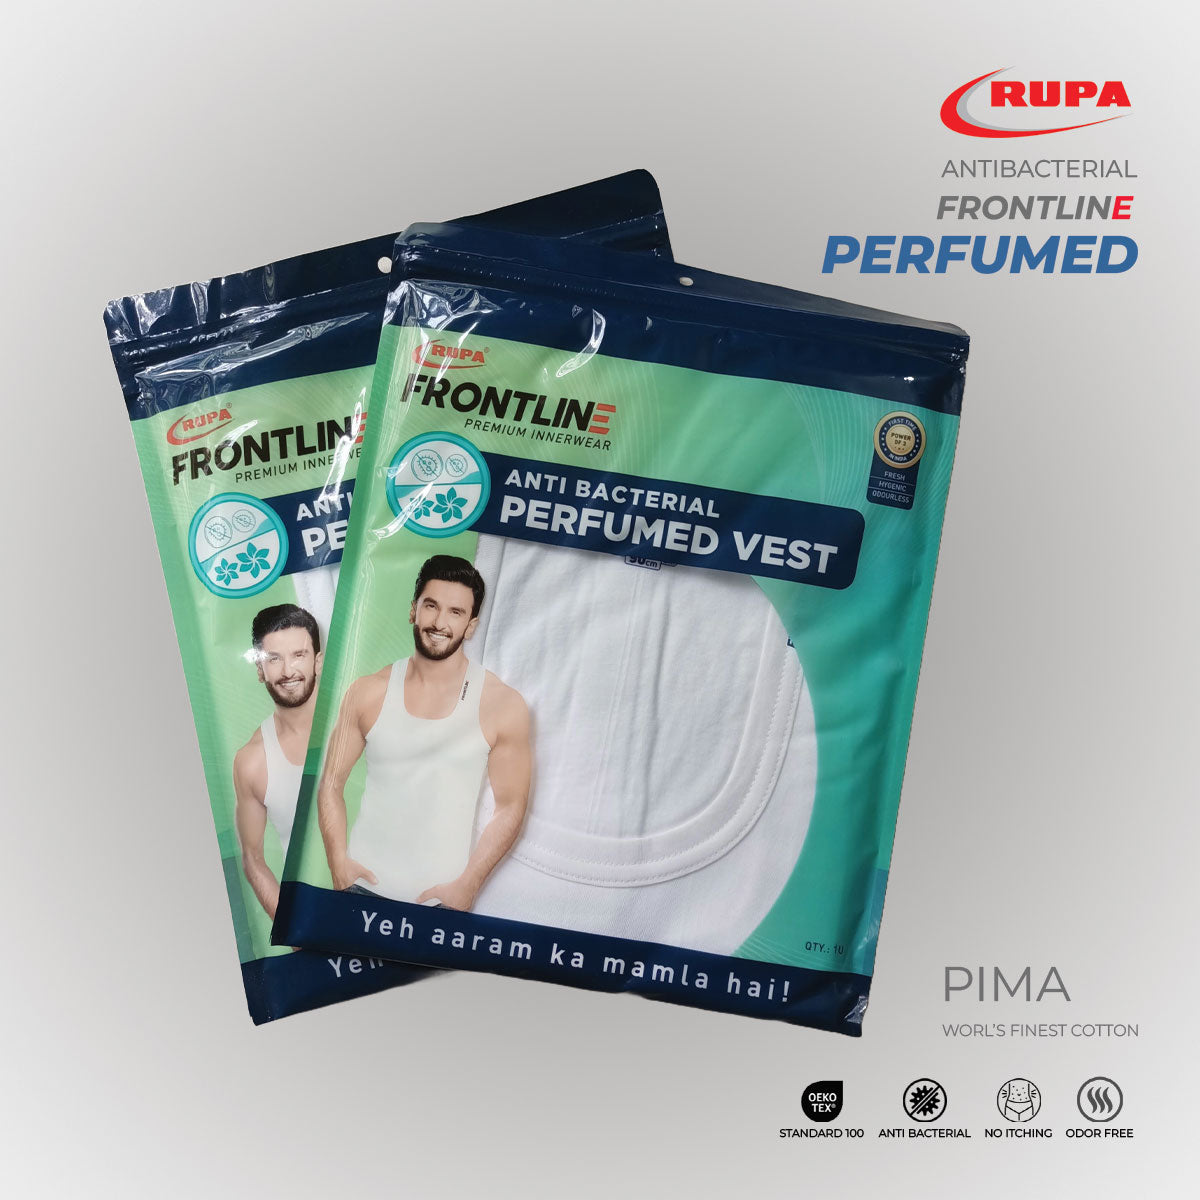 4Pieces Rupa Antibacterial Frontline Perfumed Vest VE21101_Qty04